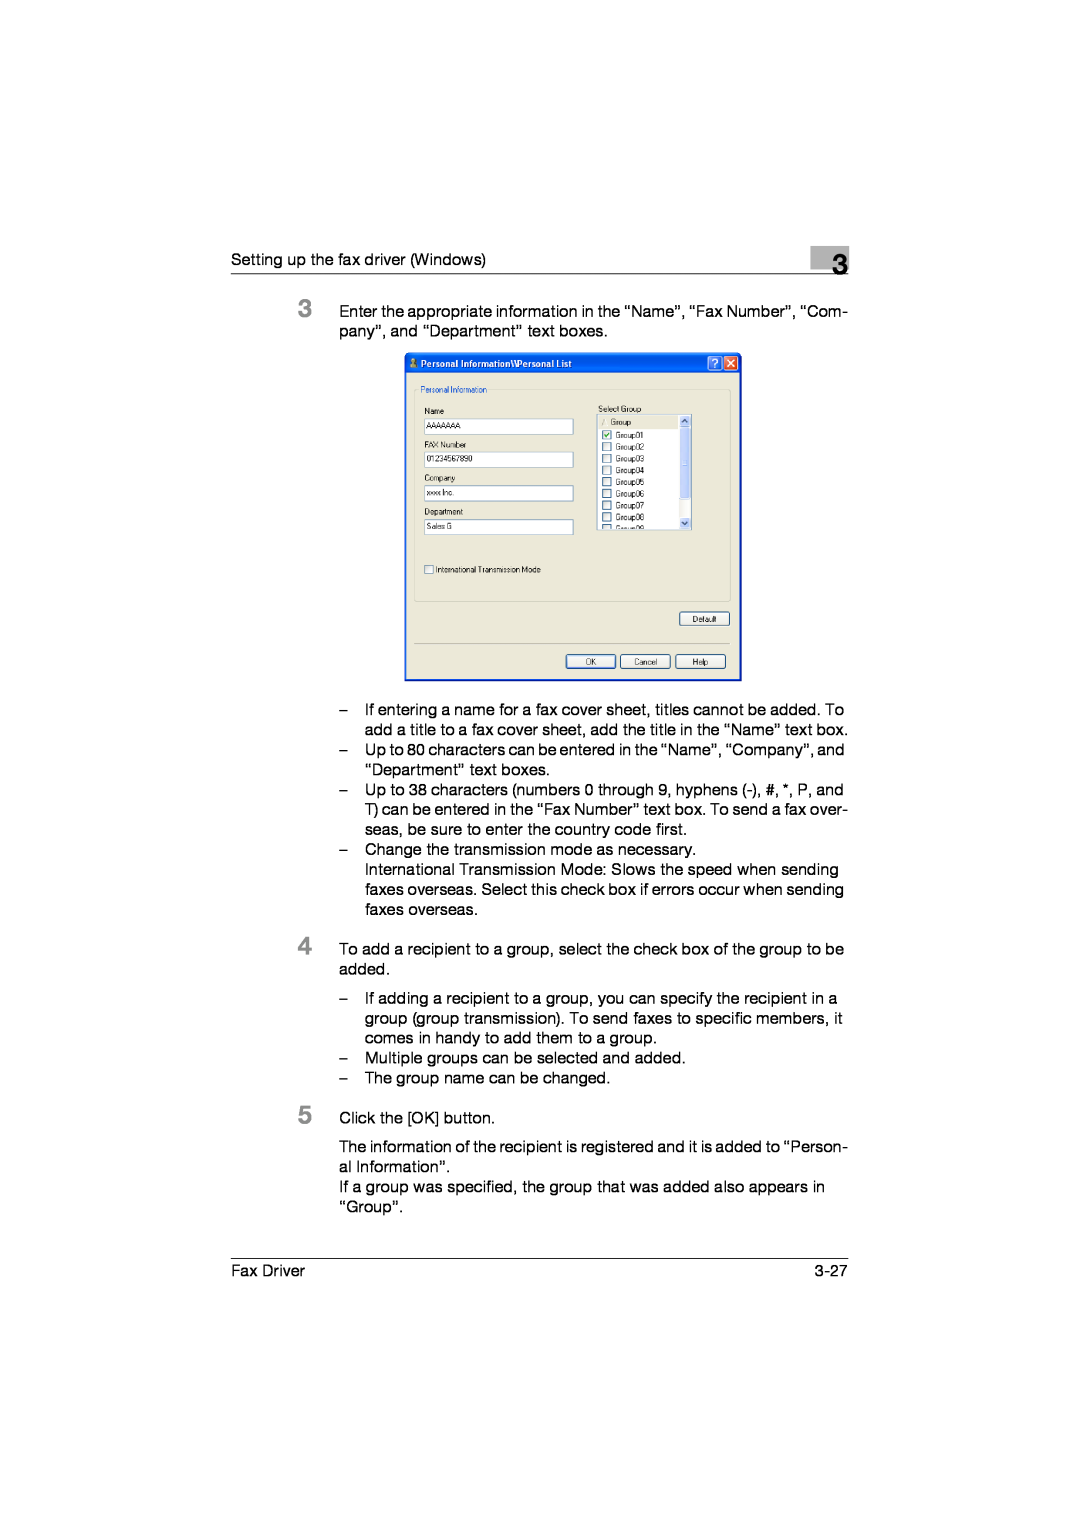 Konica Minolta 362, 282, 222 manual Setting up the fax driver Windows 